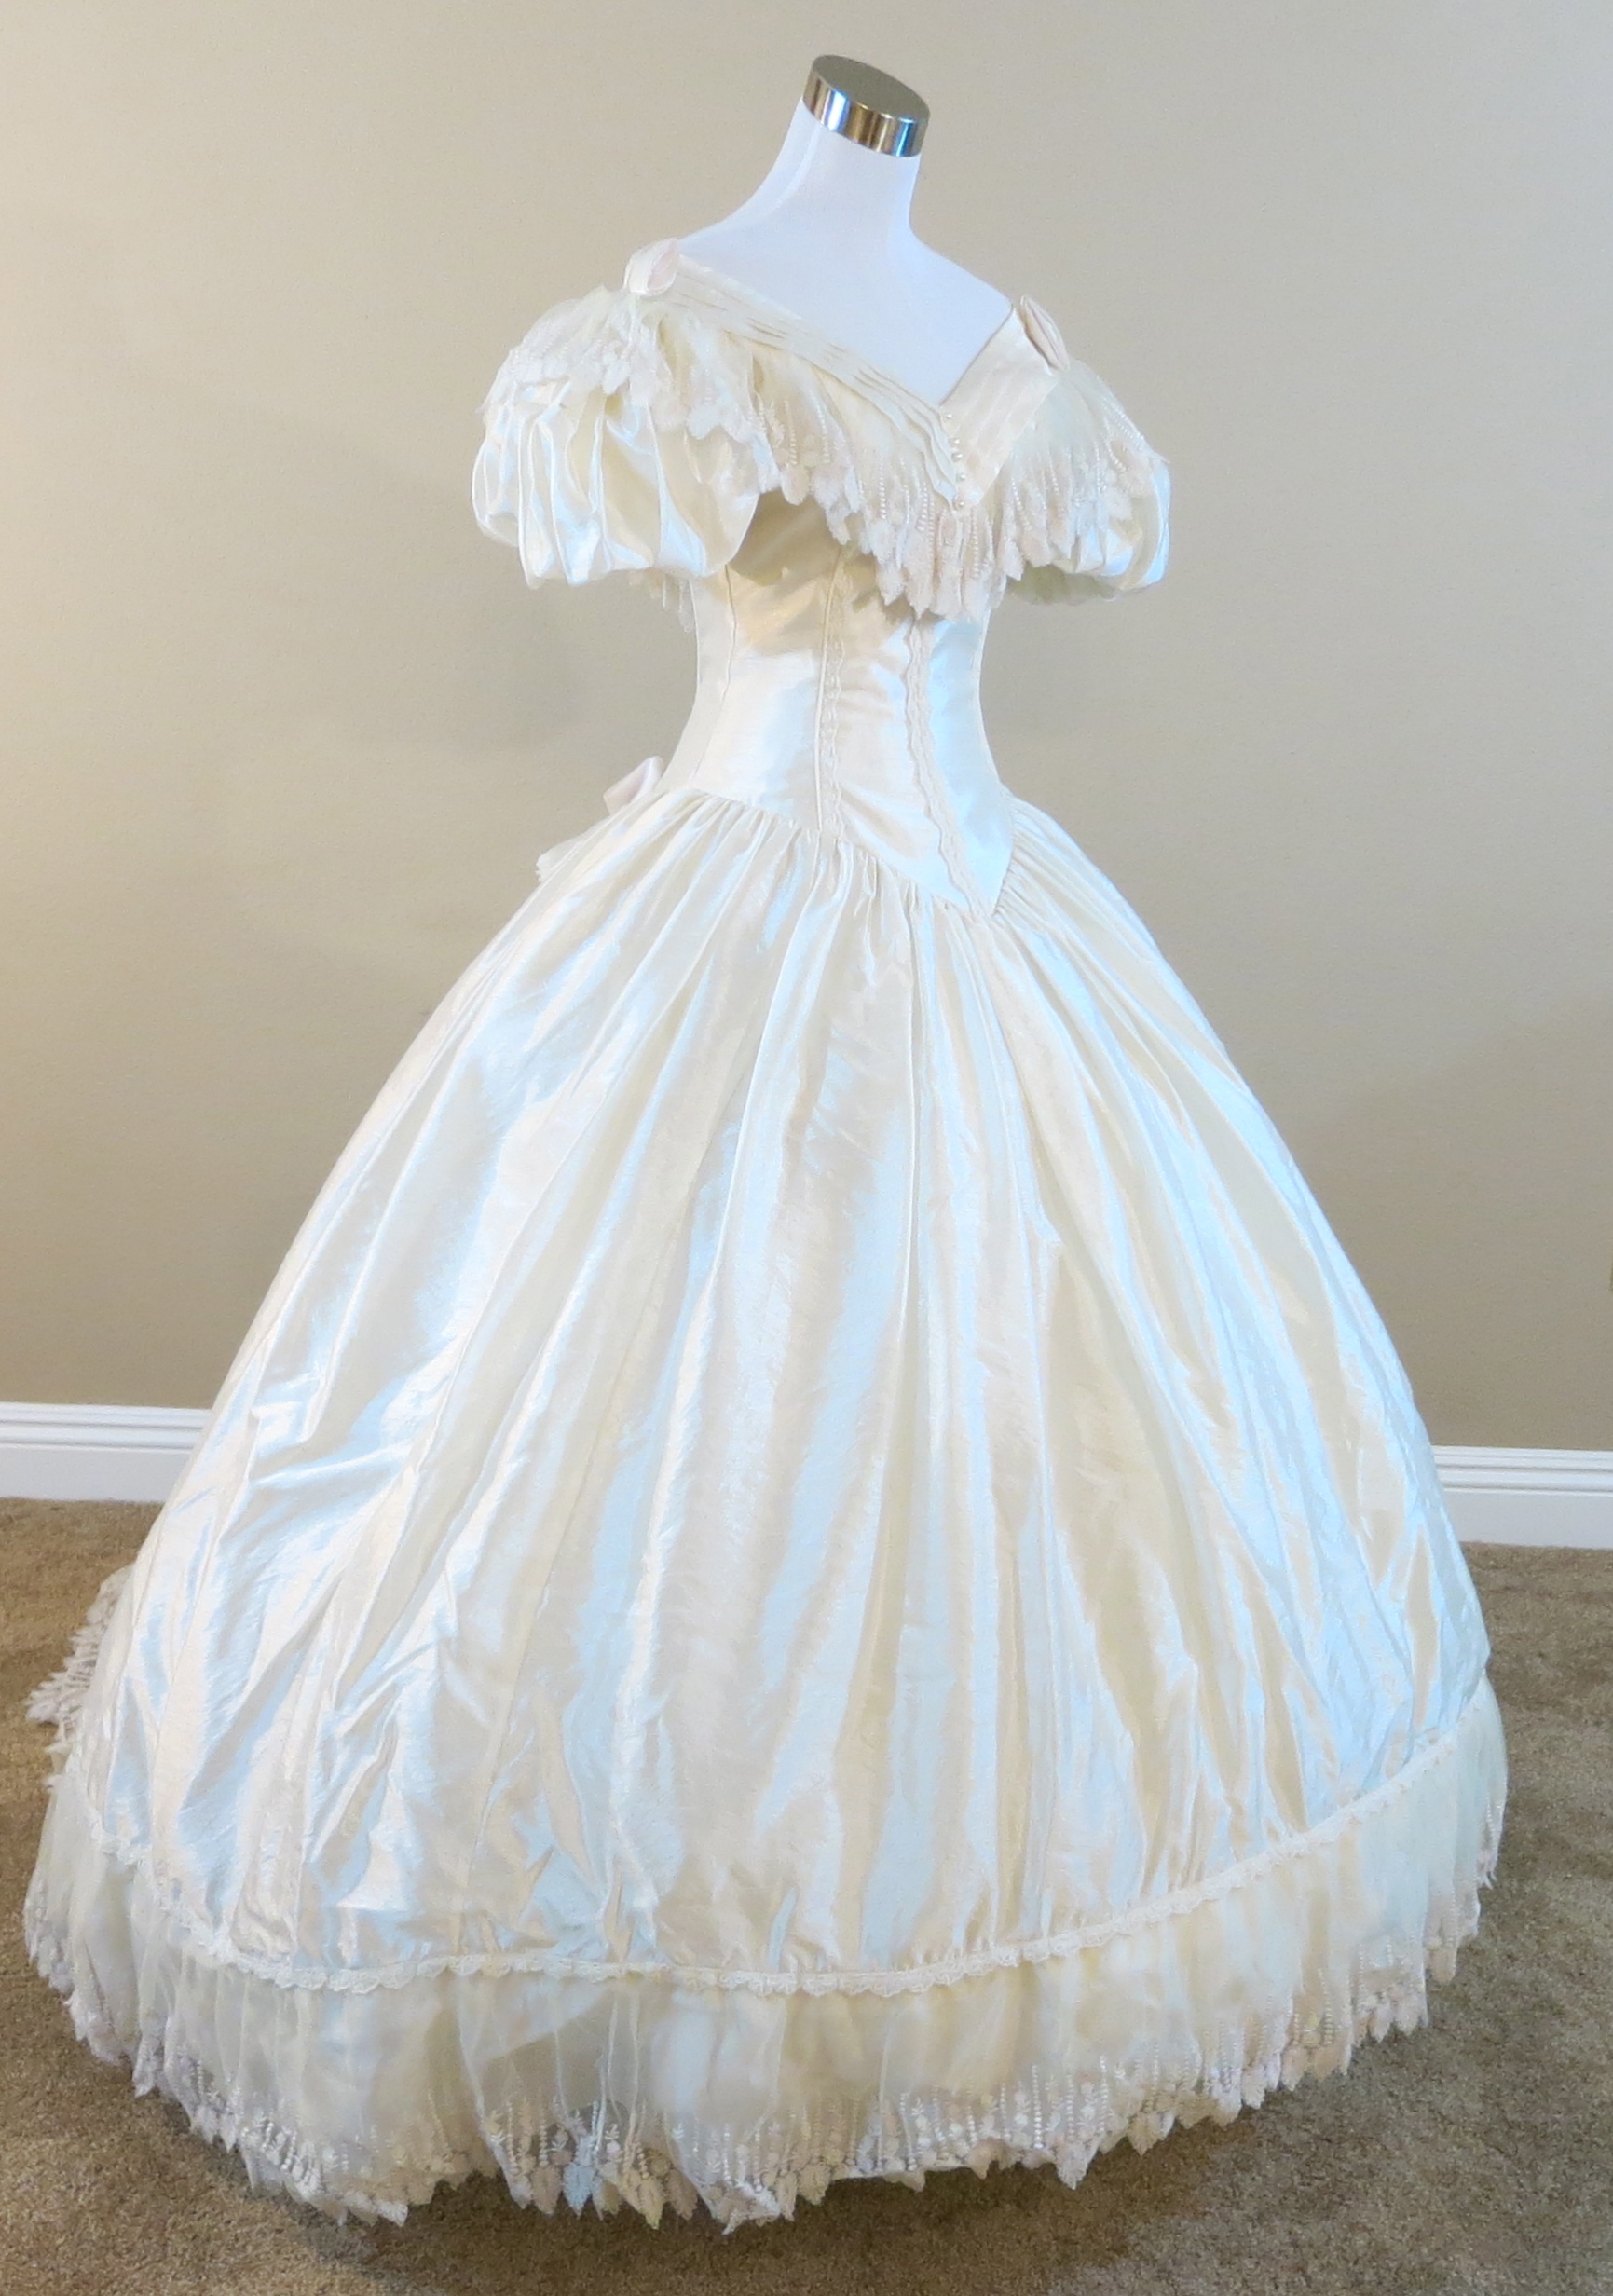 Wedding Gowns — Civil War Ball Gowns & Costume